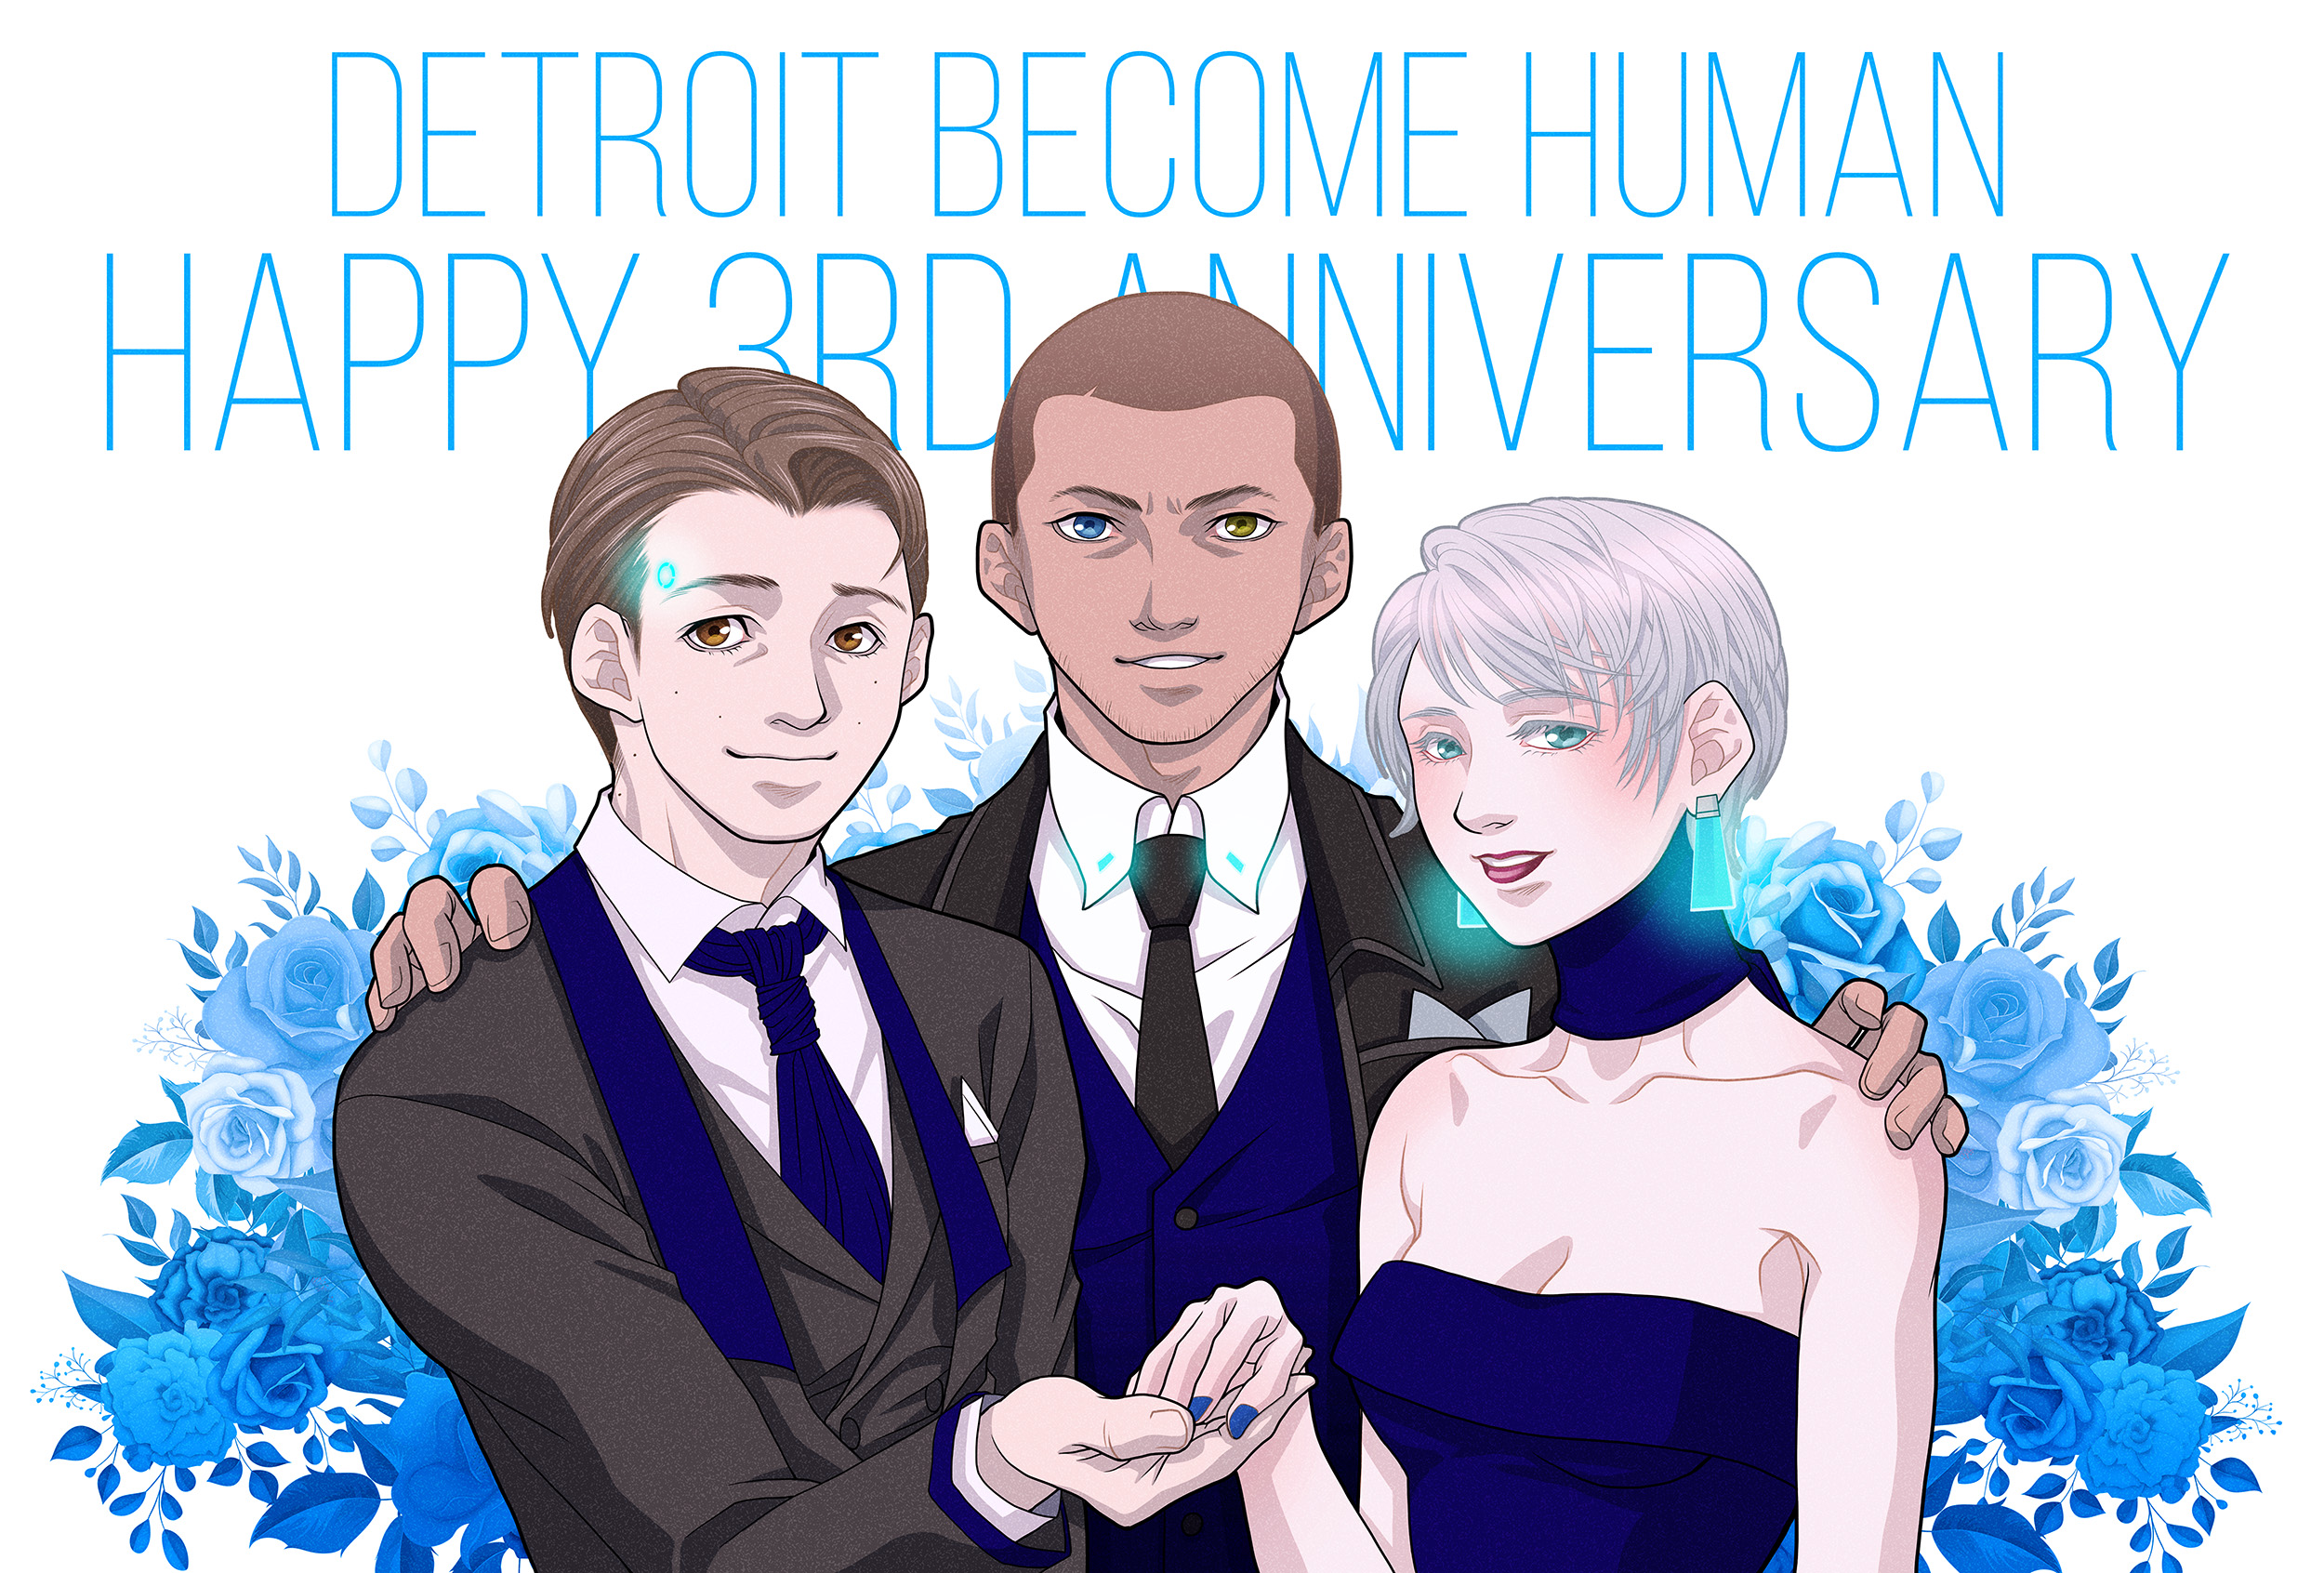 Detroit: Become Human (@Detroit_Game) / X